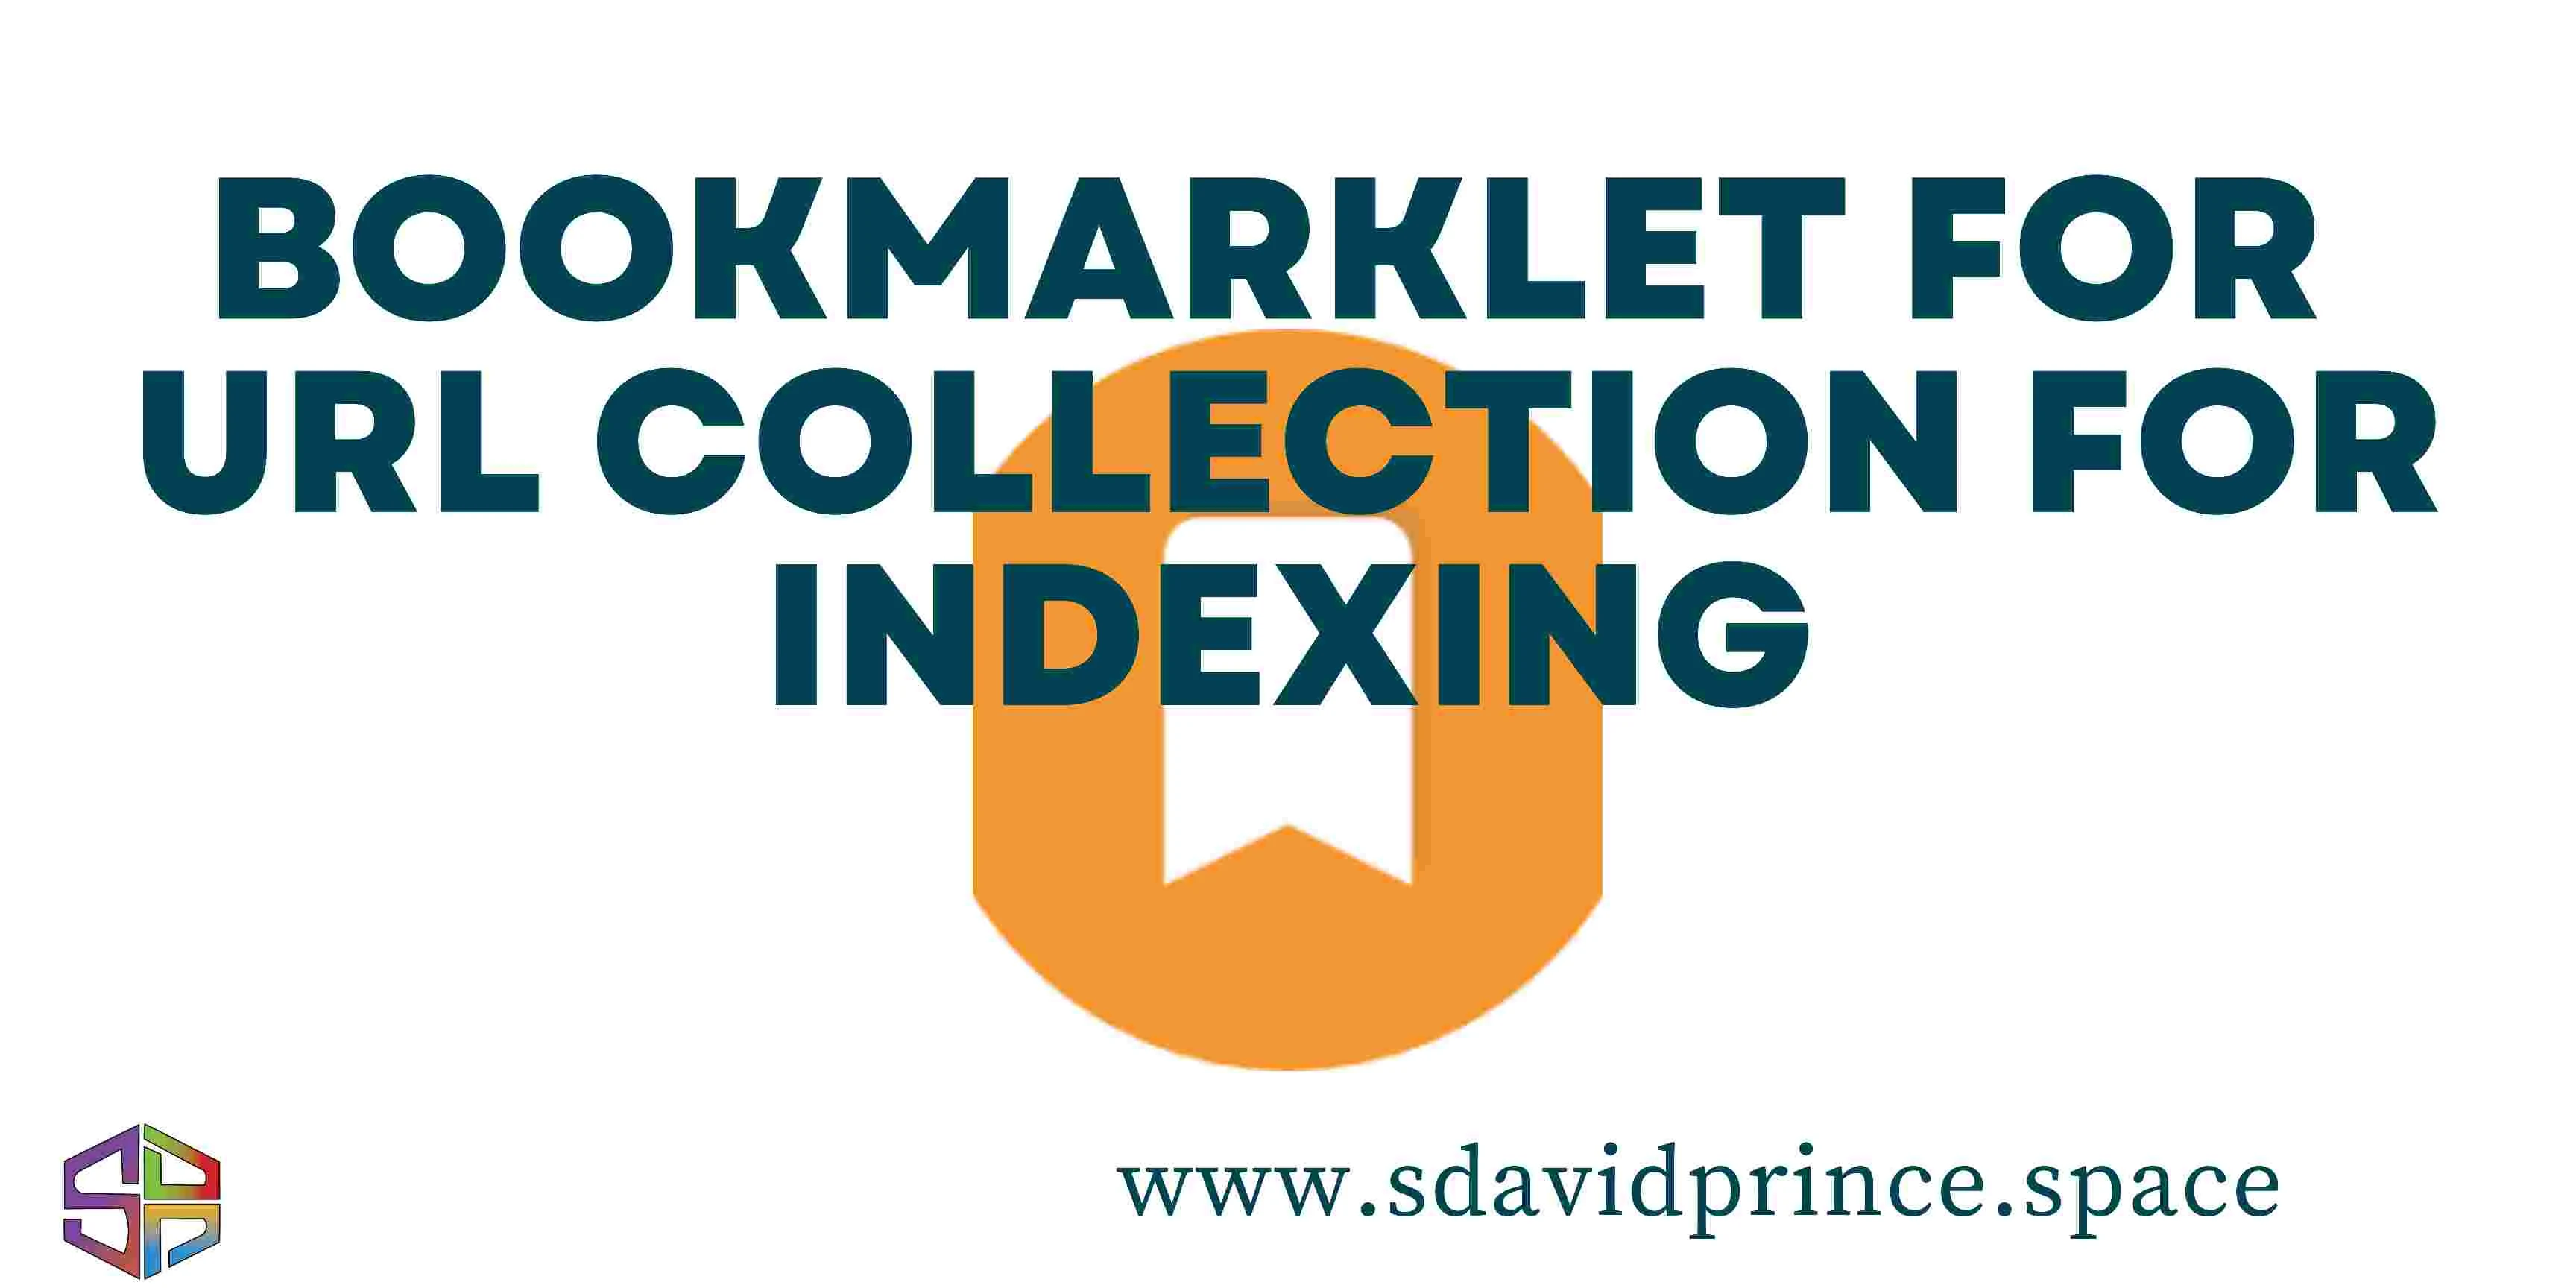 Url collection bookmarklet